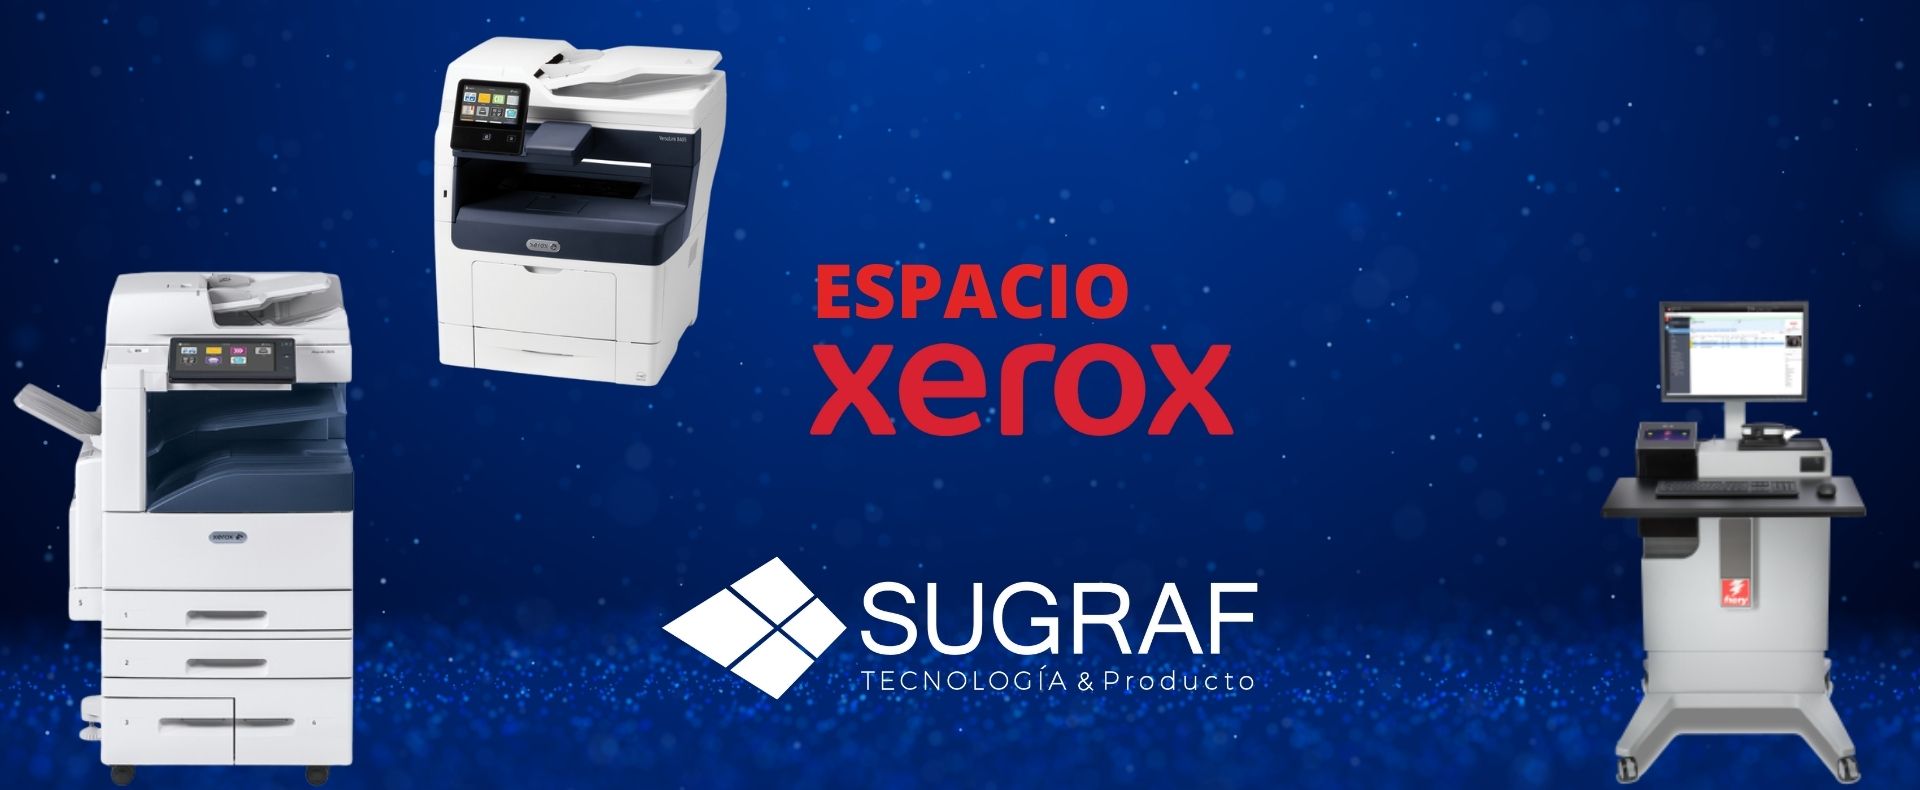 Distribuidor oficial xerox en Aragon